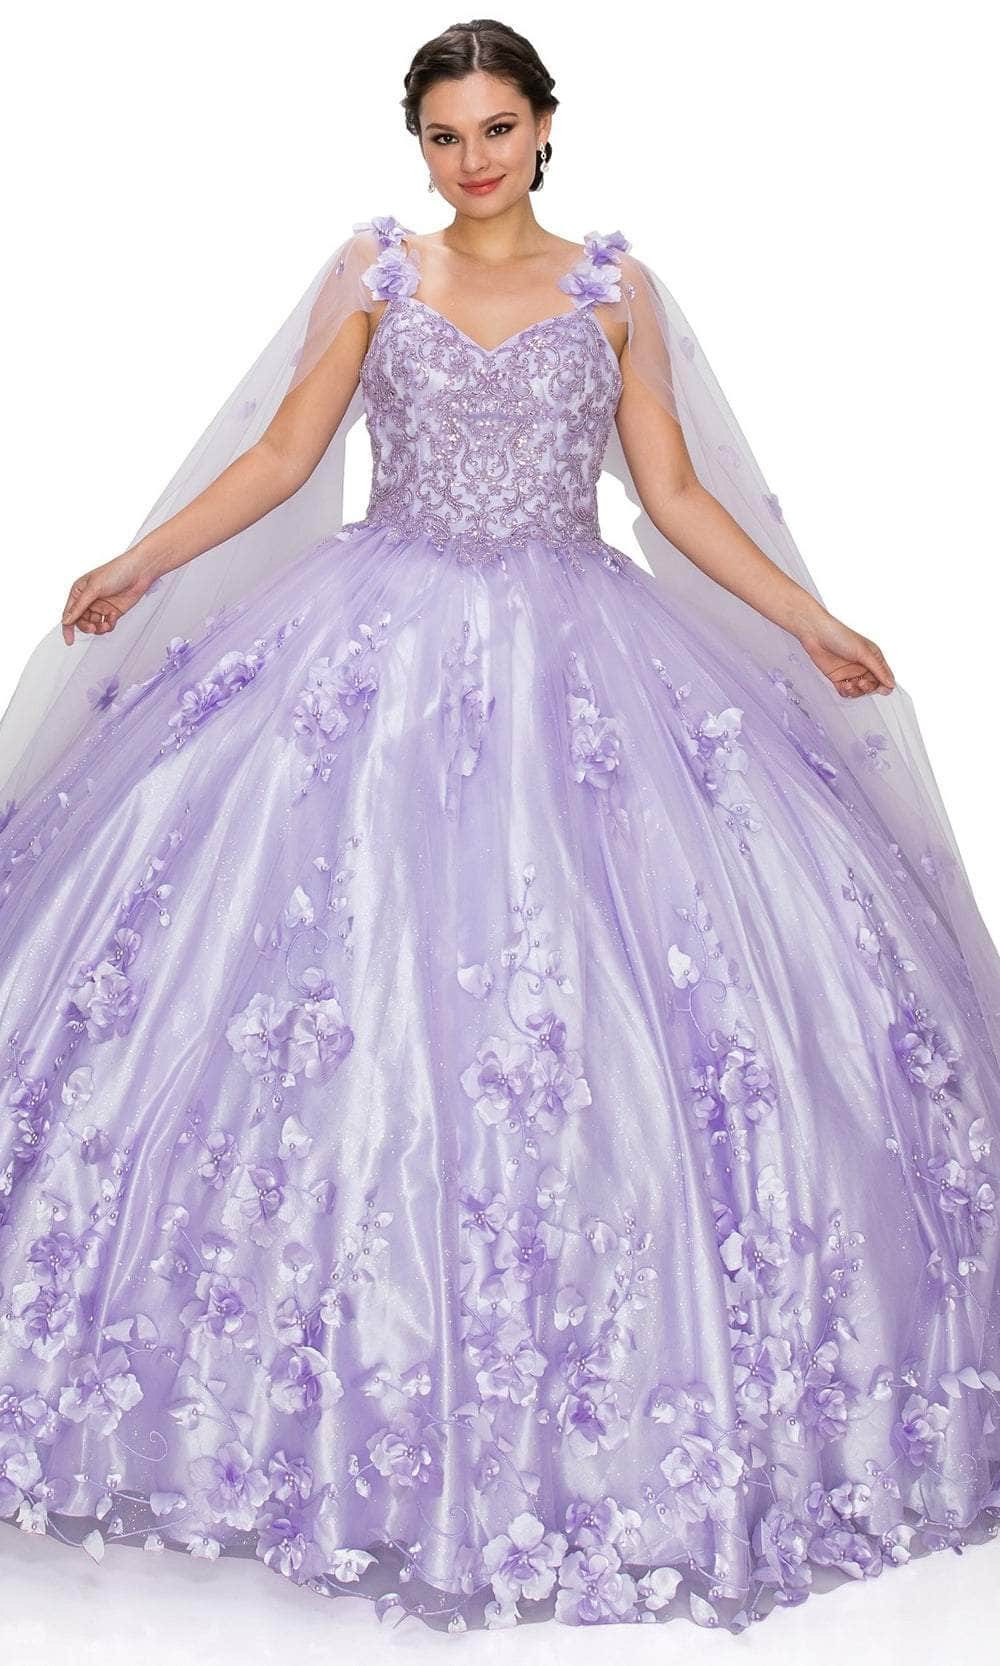 Cinderella Couture 8030J - Floral Detachable Cape Ballgown Special Occasion Dress